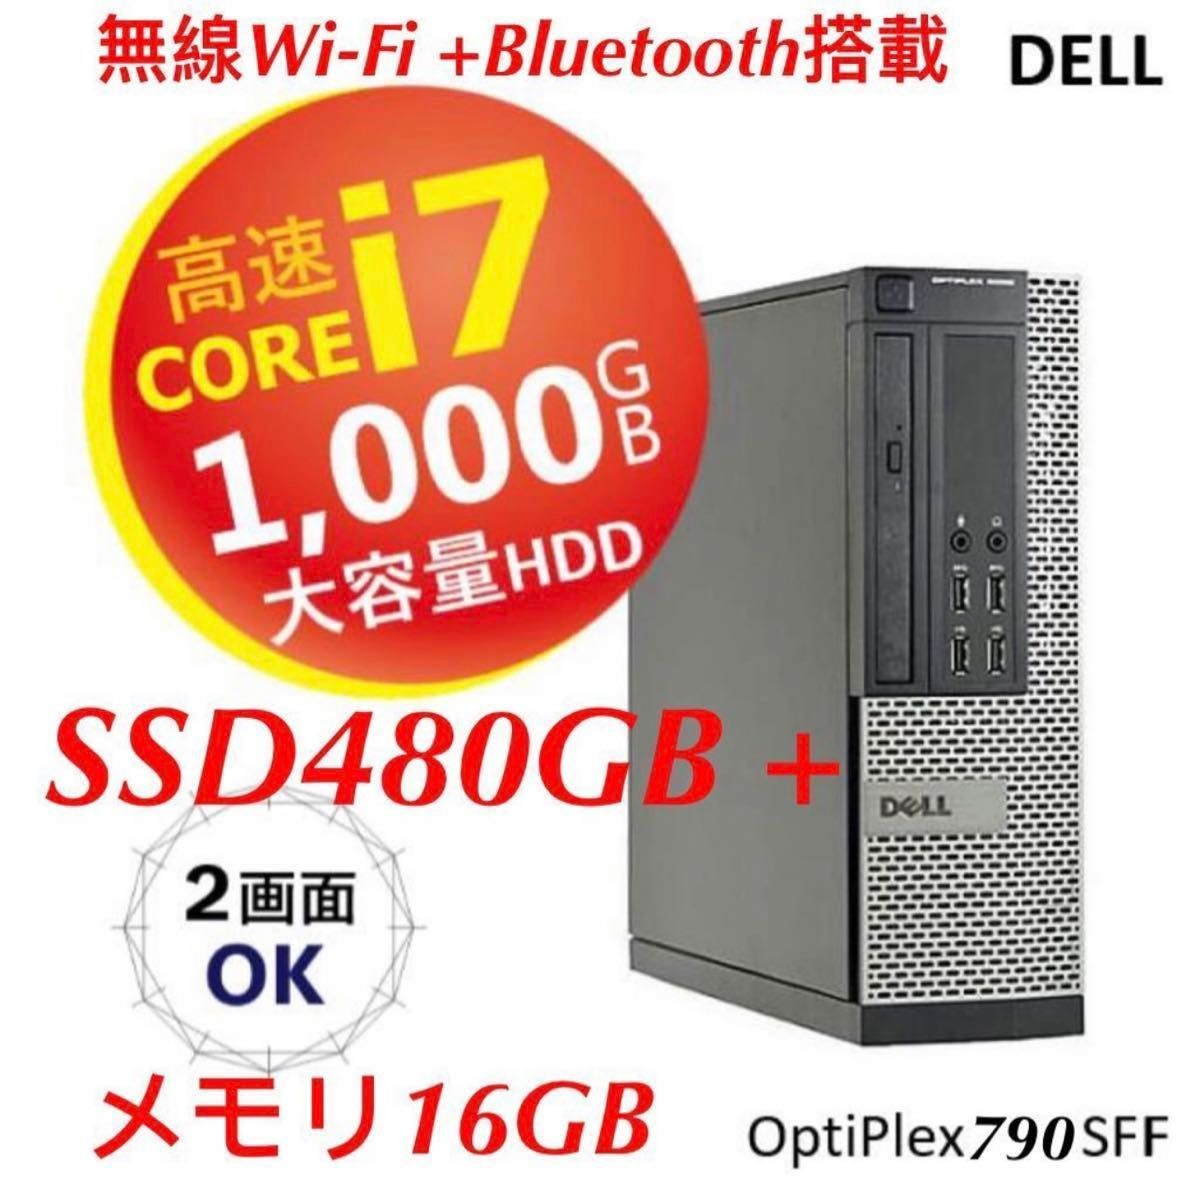 最強 i7 /SSD480GB+HDD1TB/DELL Core i7-2600/16GB/無線Wi-Fi + Bluetooth